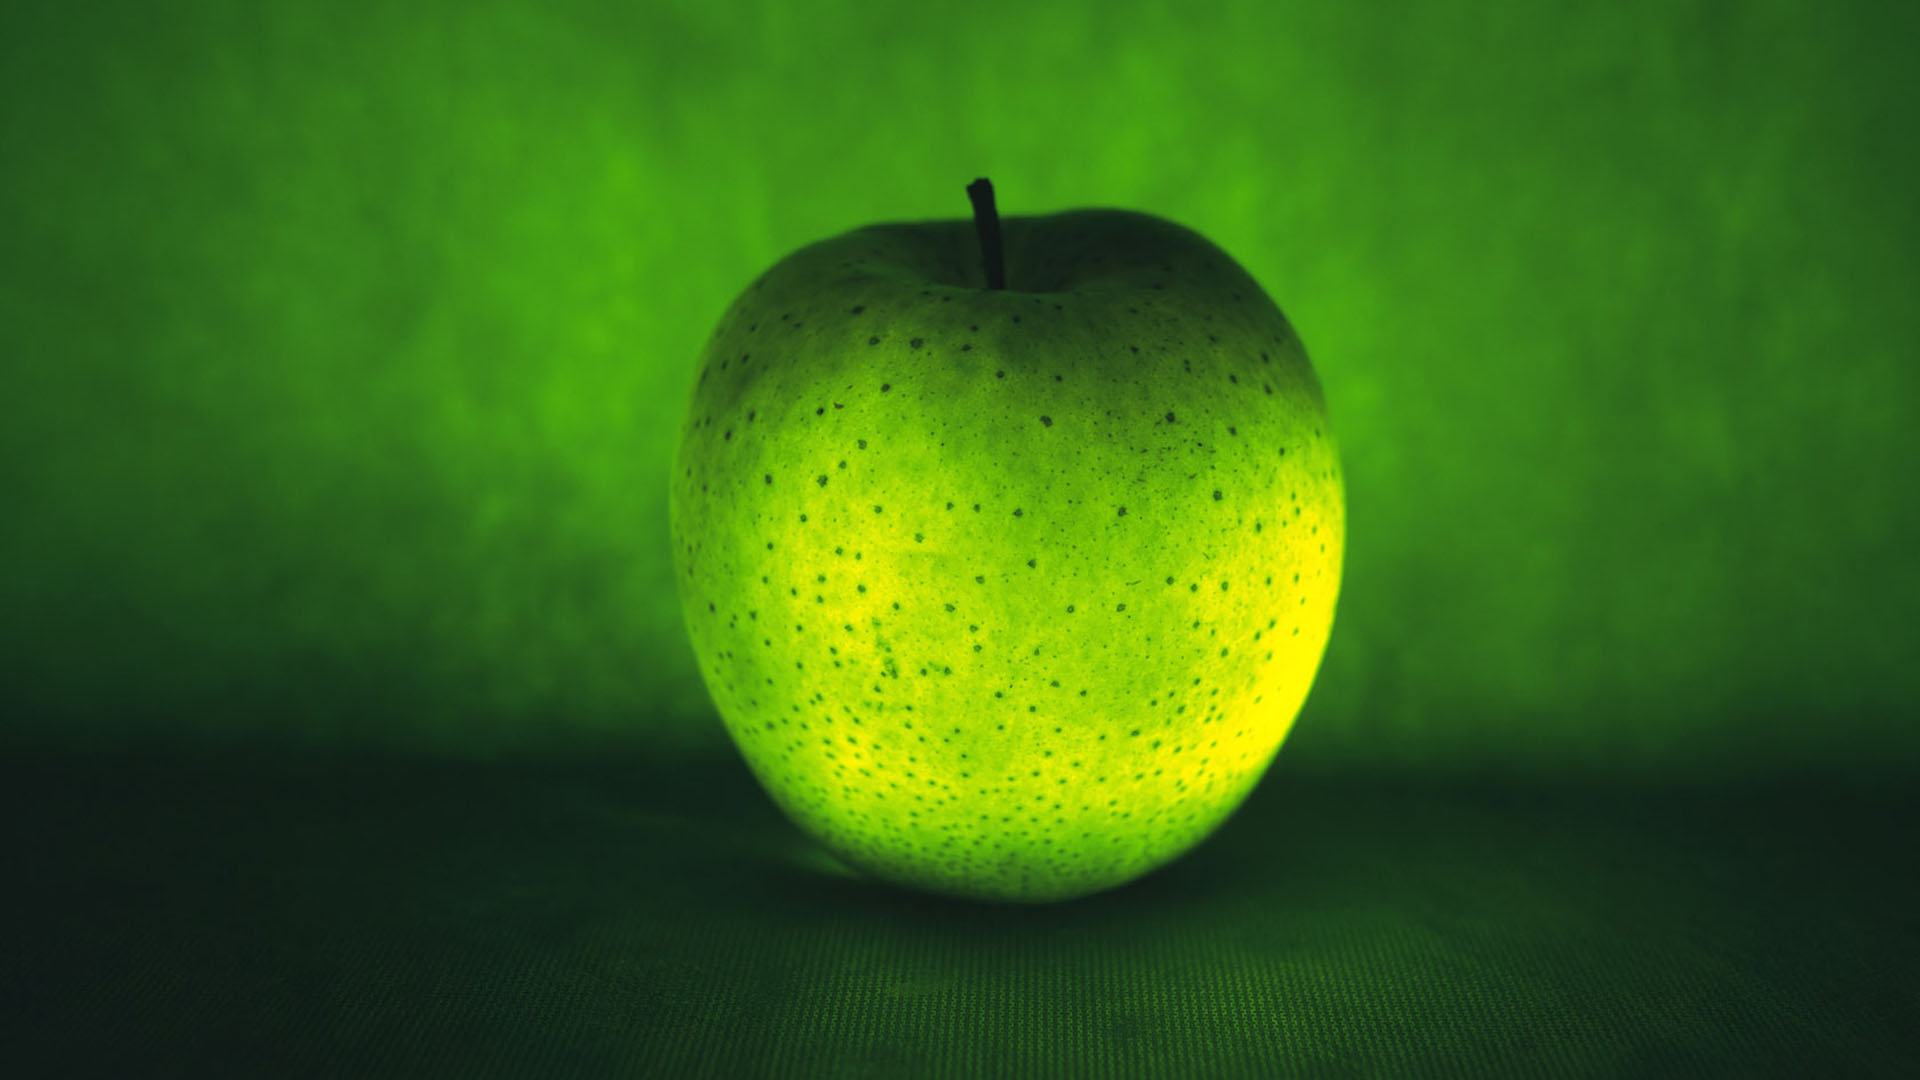 Desktop green apple wallpaper hd 1080p download